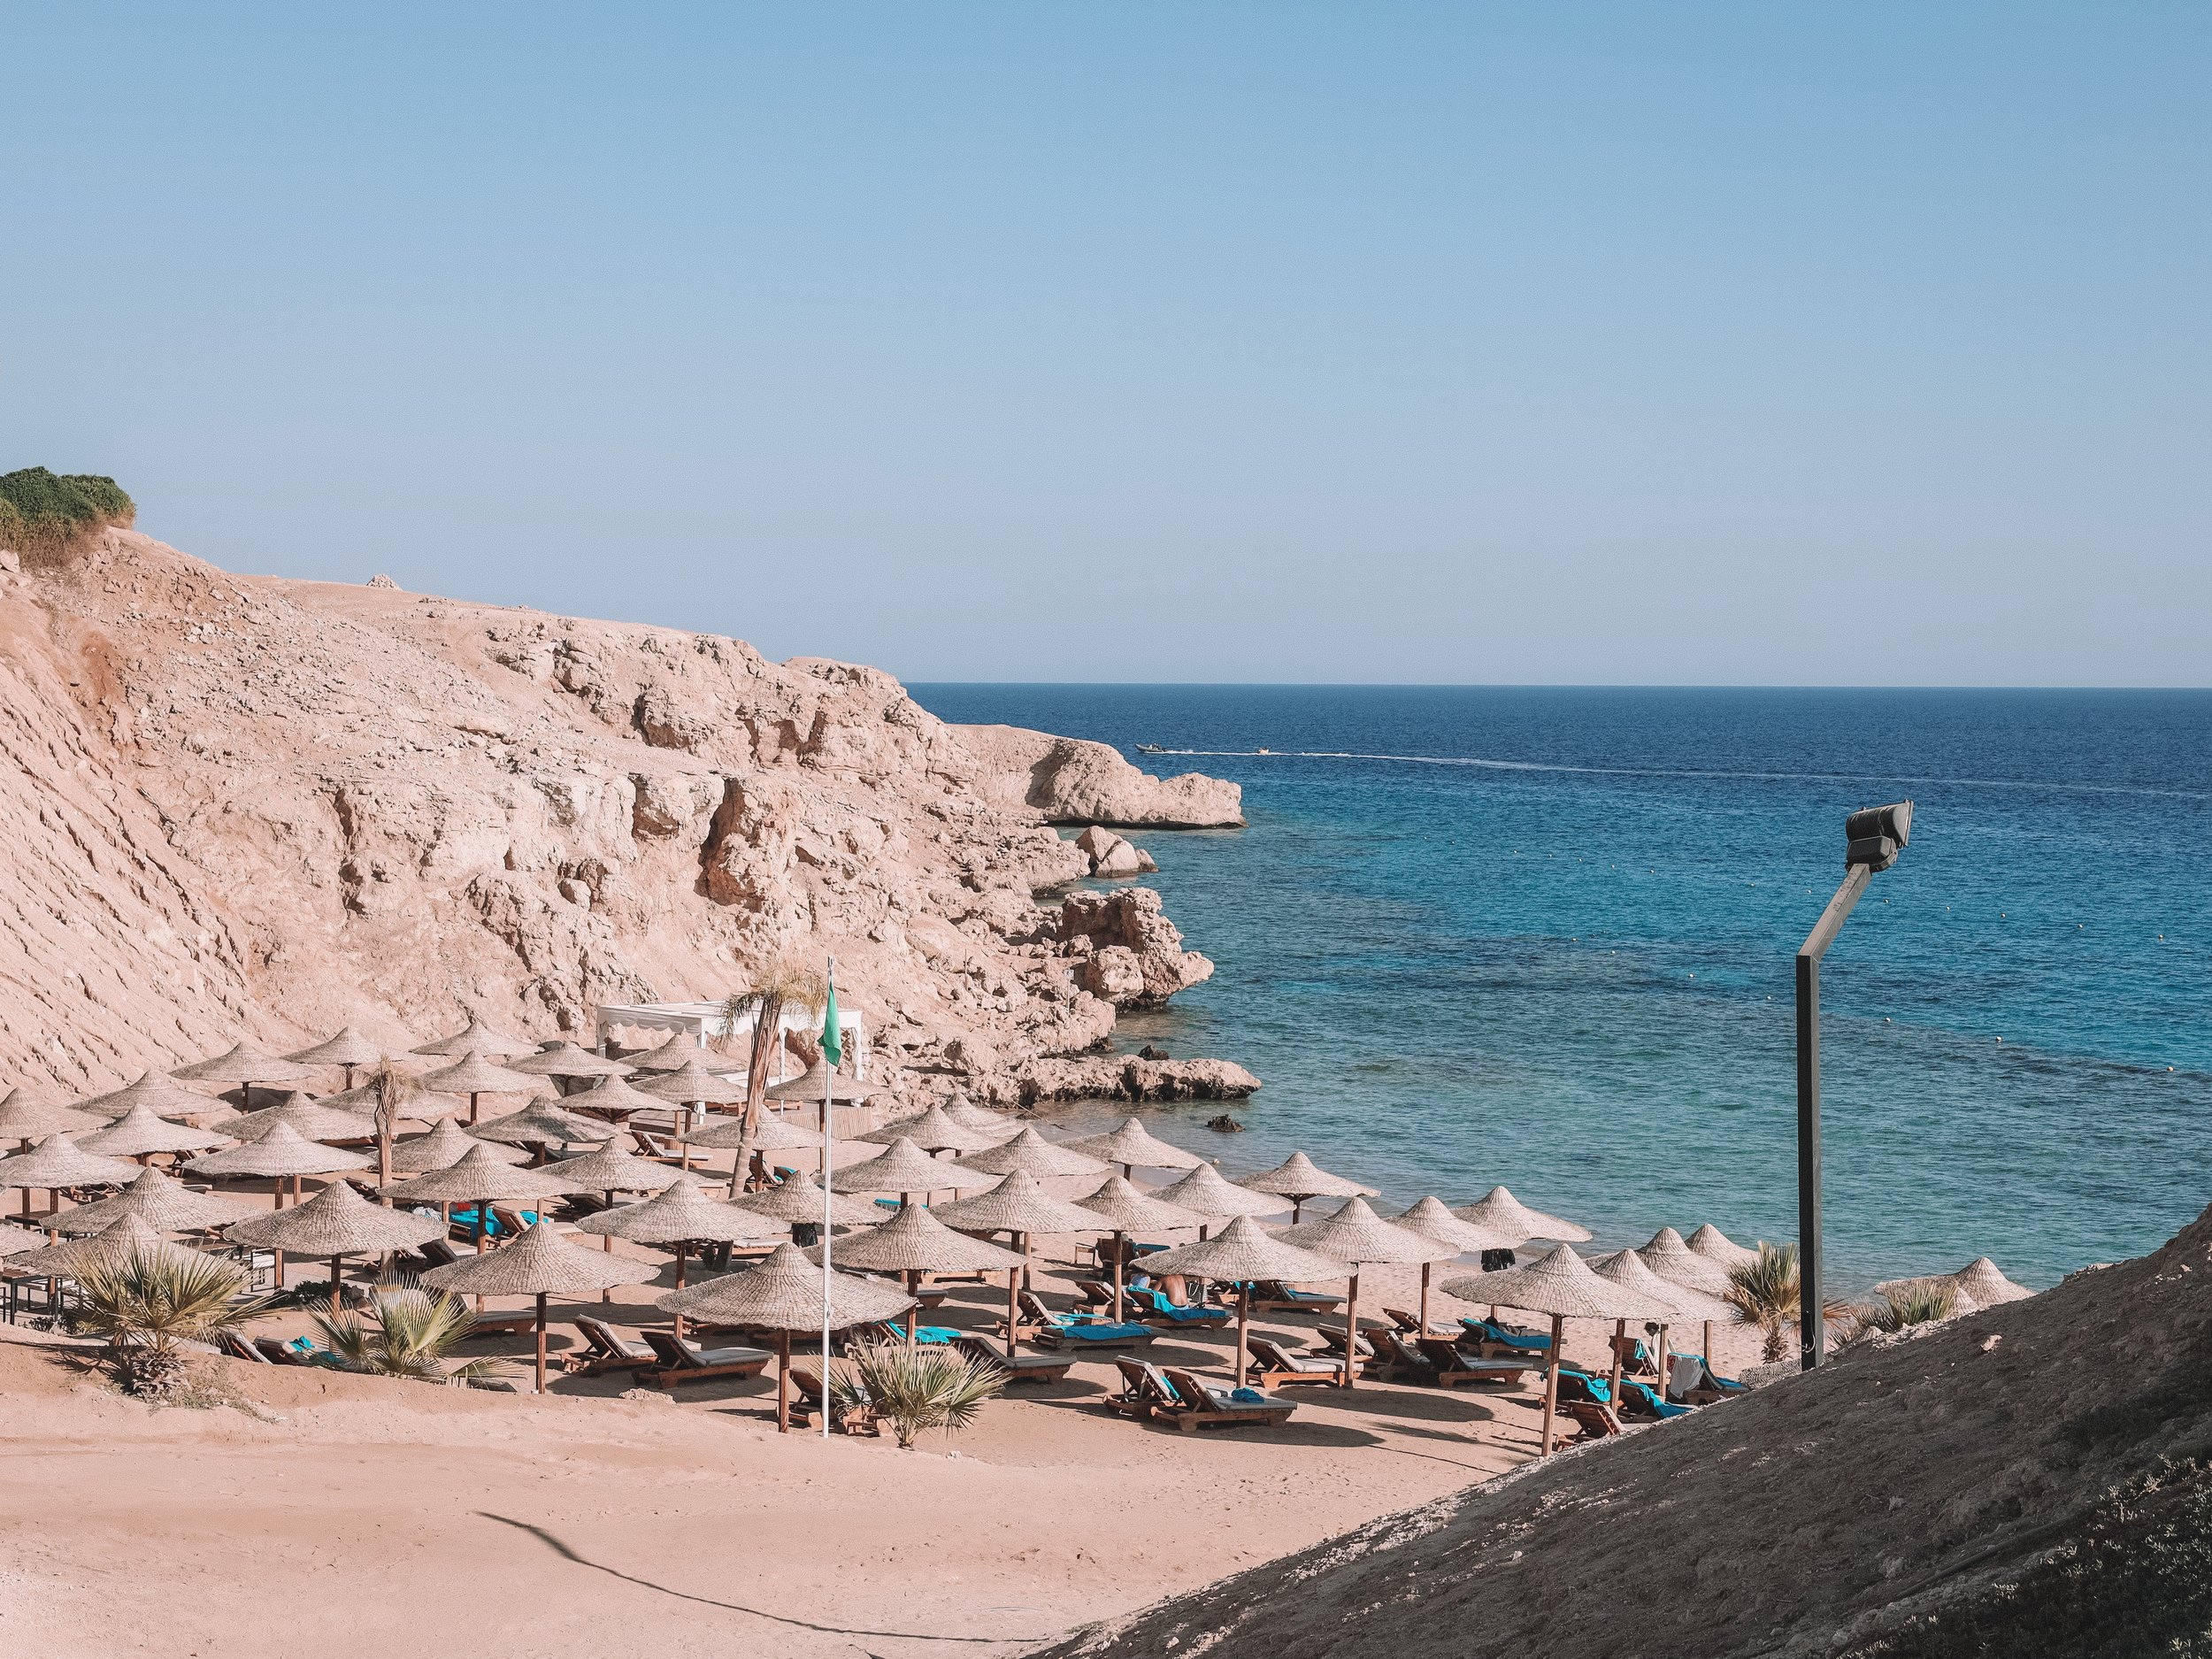 One of the private beaches of Mövenpick - Sharm El-Sheikh - Sinai Peninsula - Egypt